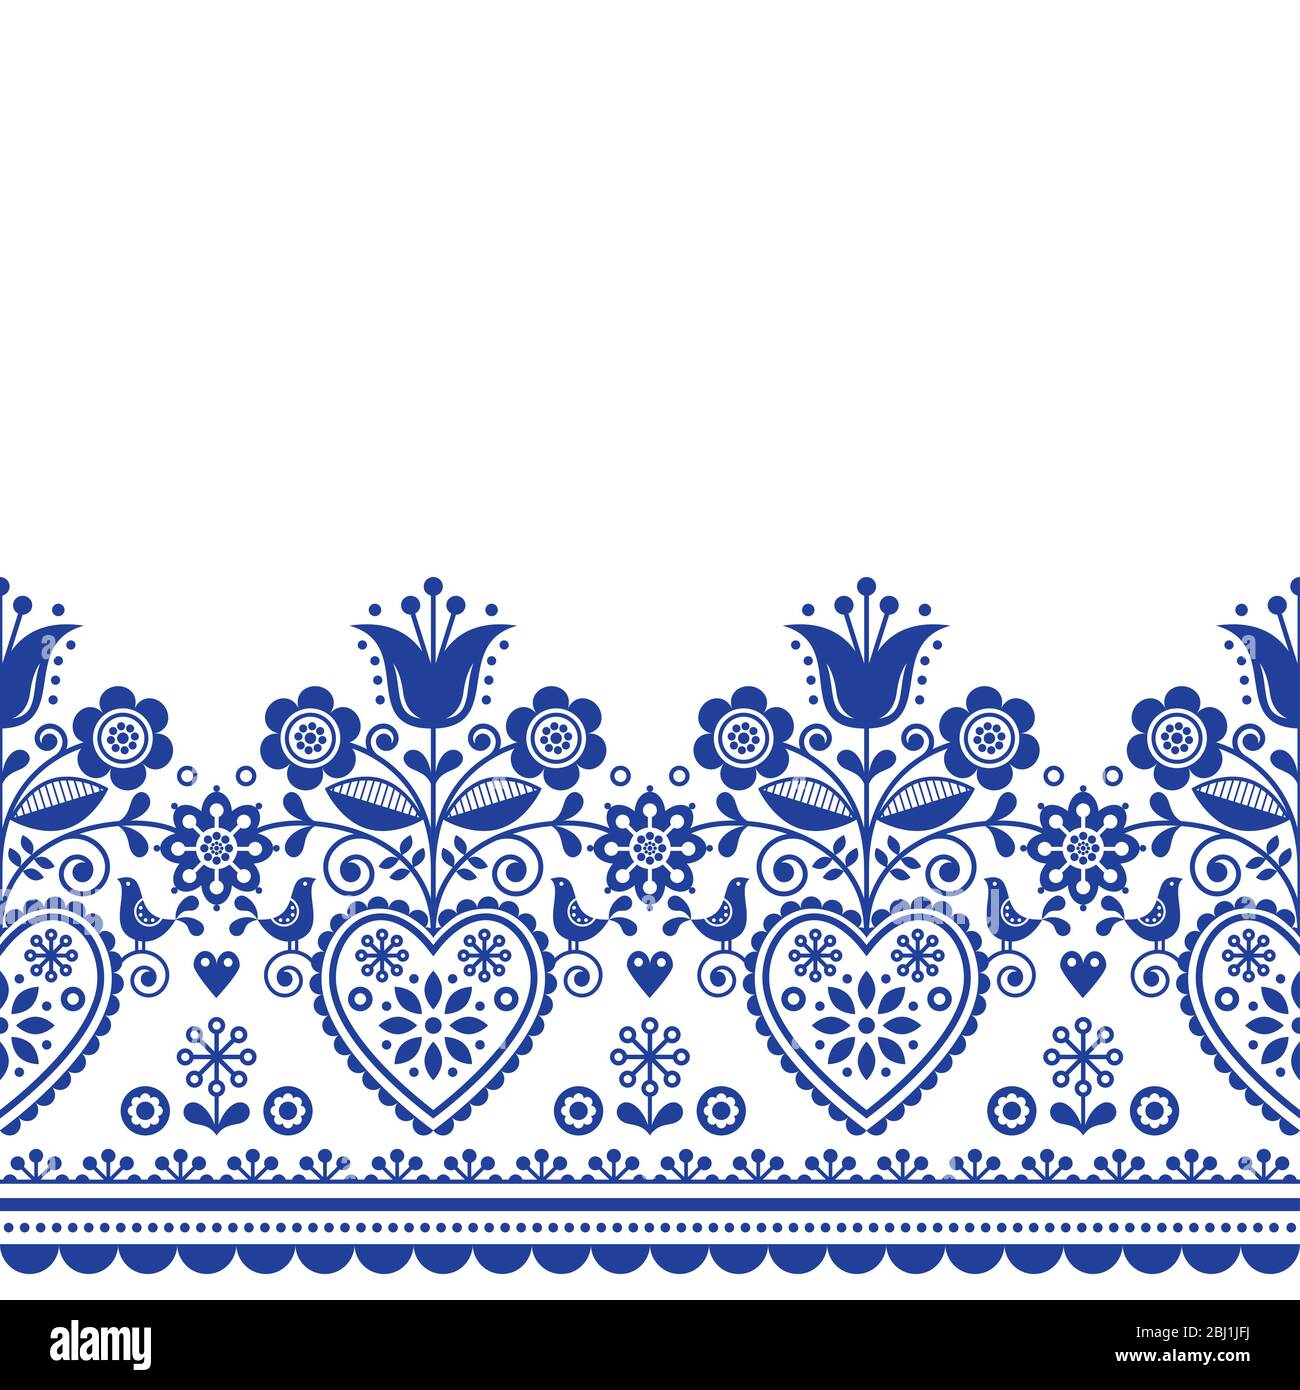 Skandinavische Volkskunst Grußkarte Vektor Muster mit Vögeln und Blumen, Nordic Retro repetitive Dekoration mit Blumen Stock Vektor